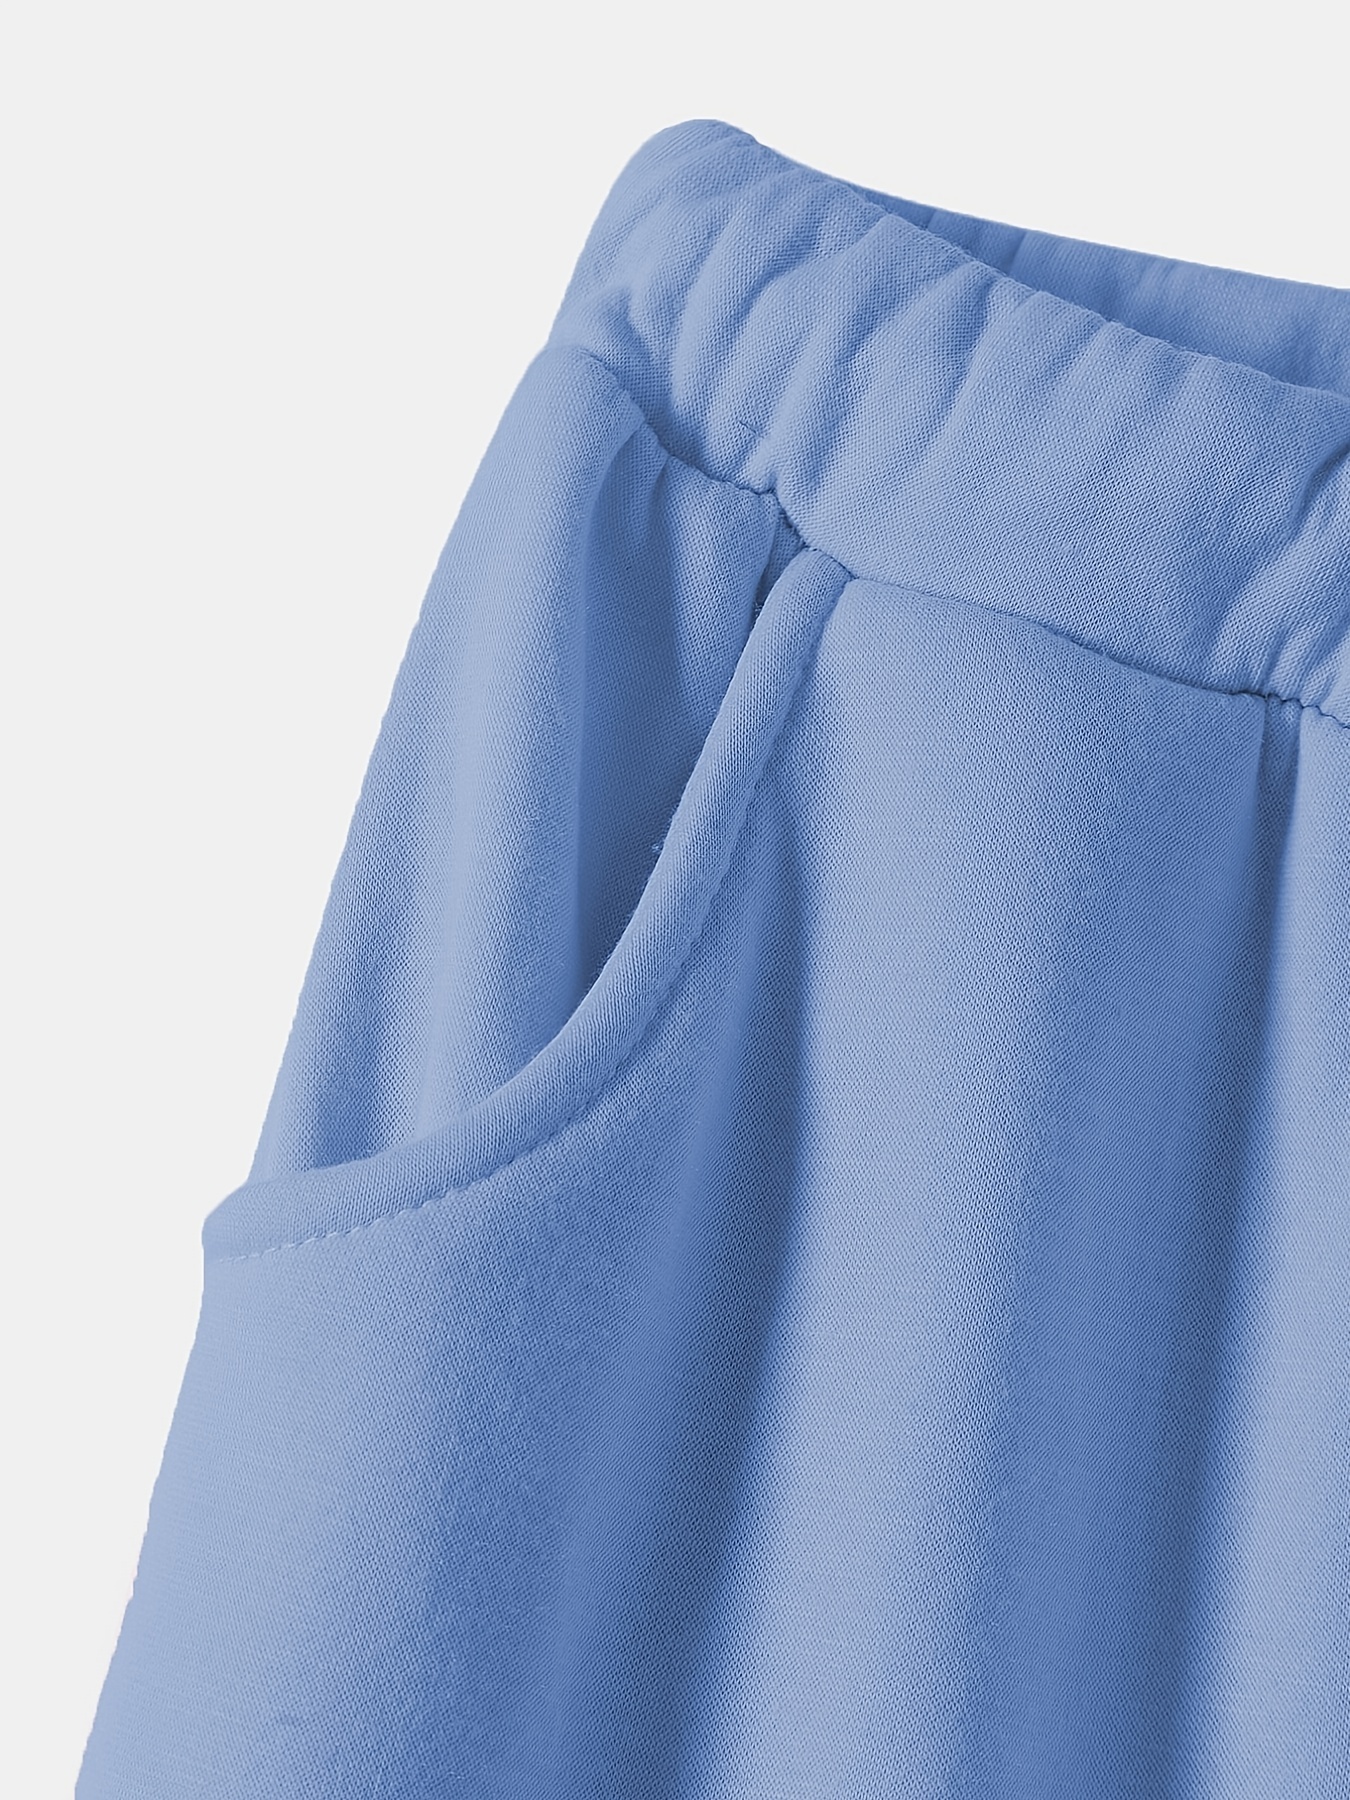 solid drawstring thermal sweatpants versatile loose comfy jogger pants womens clothing details 37